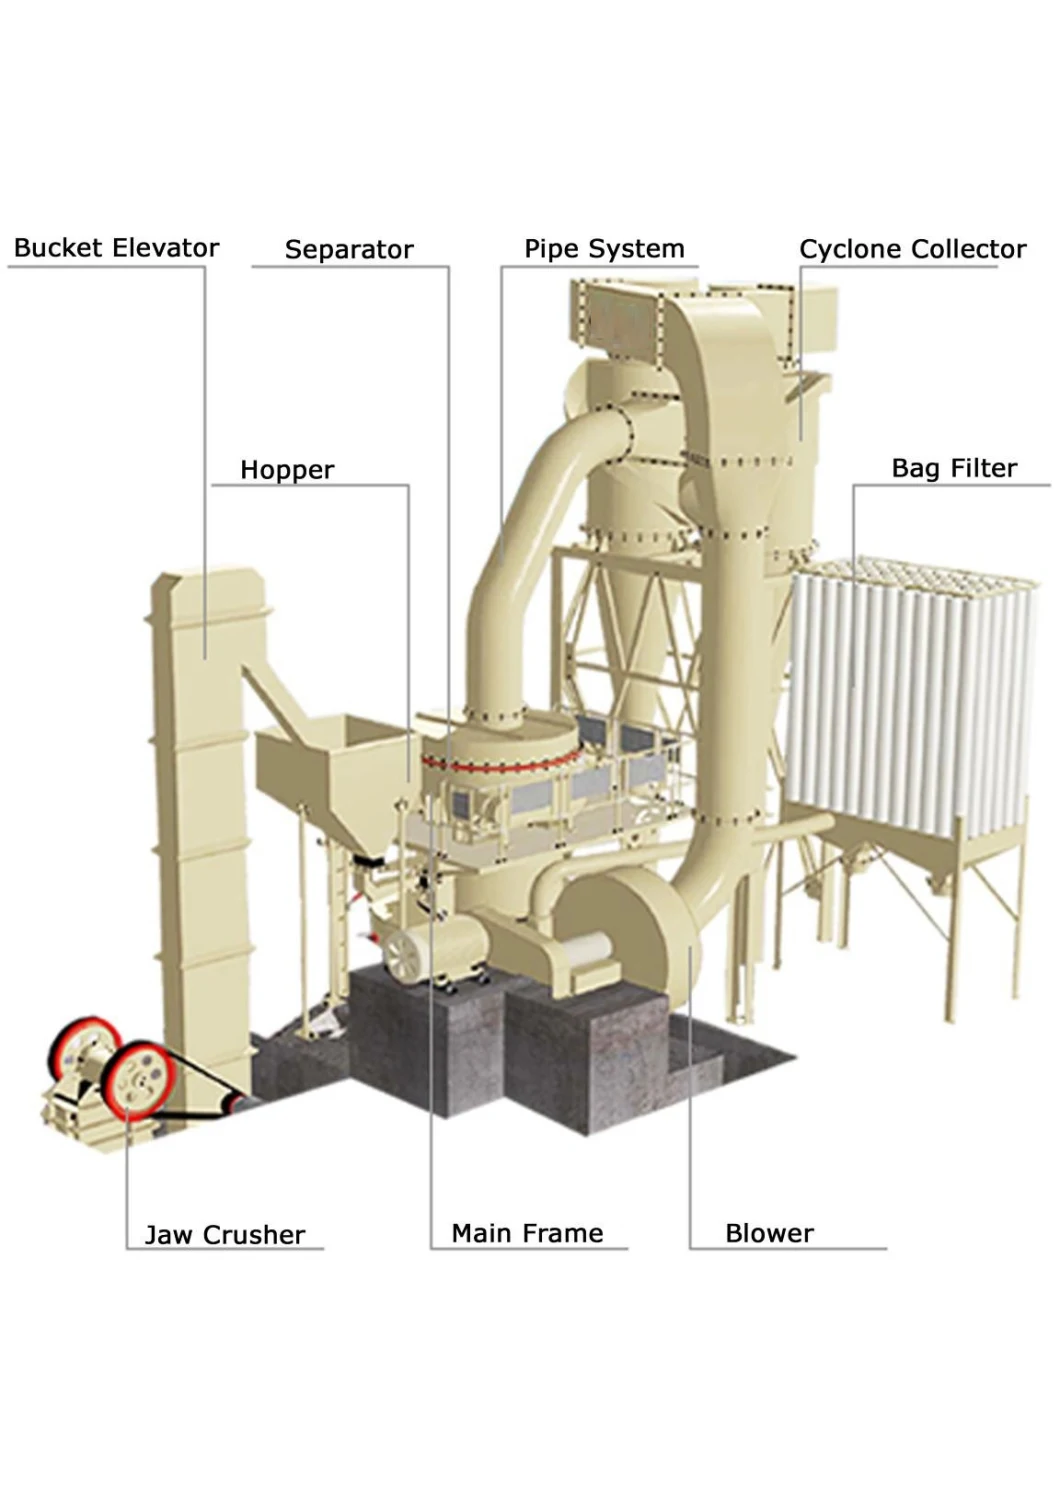 Limestone Raymond Grinding Mill Calcium Carbonate Powder Production Machine